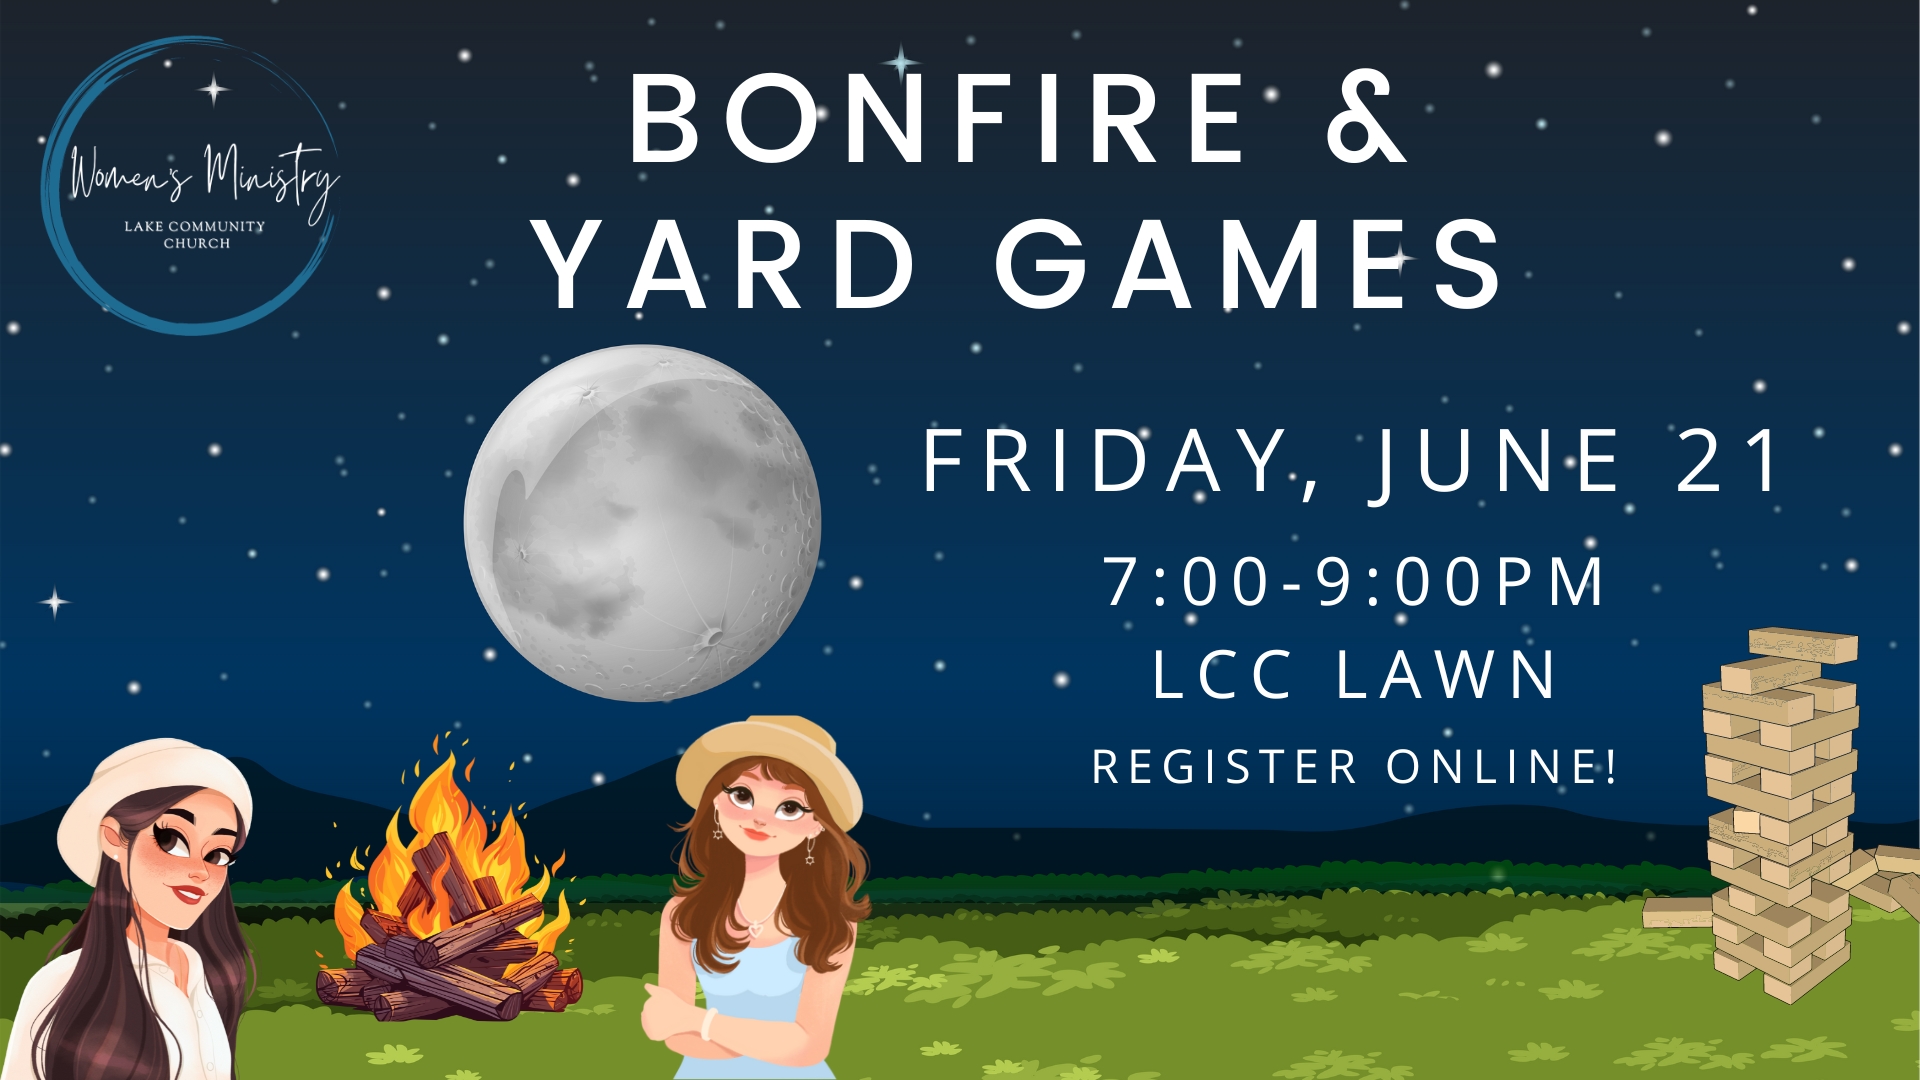 Bonfire & Yard Games